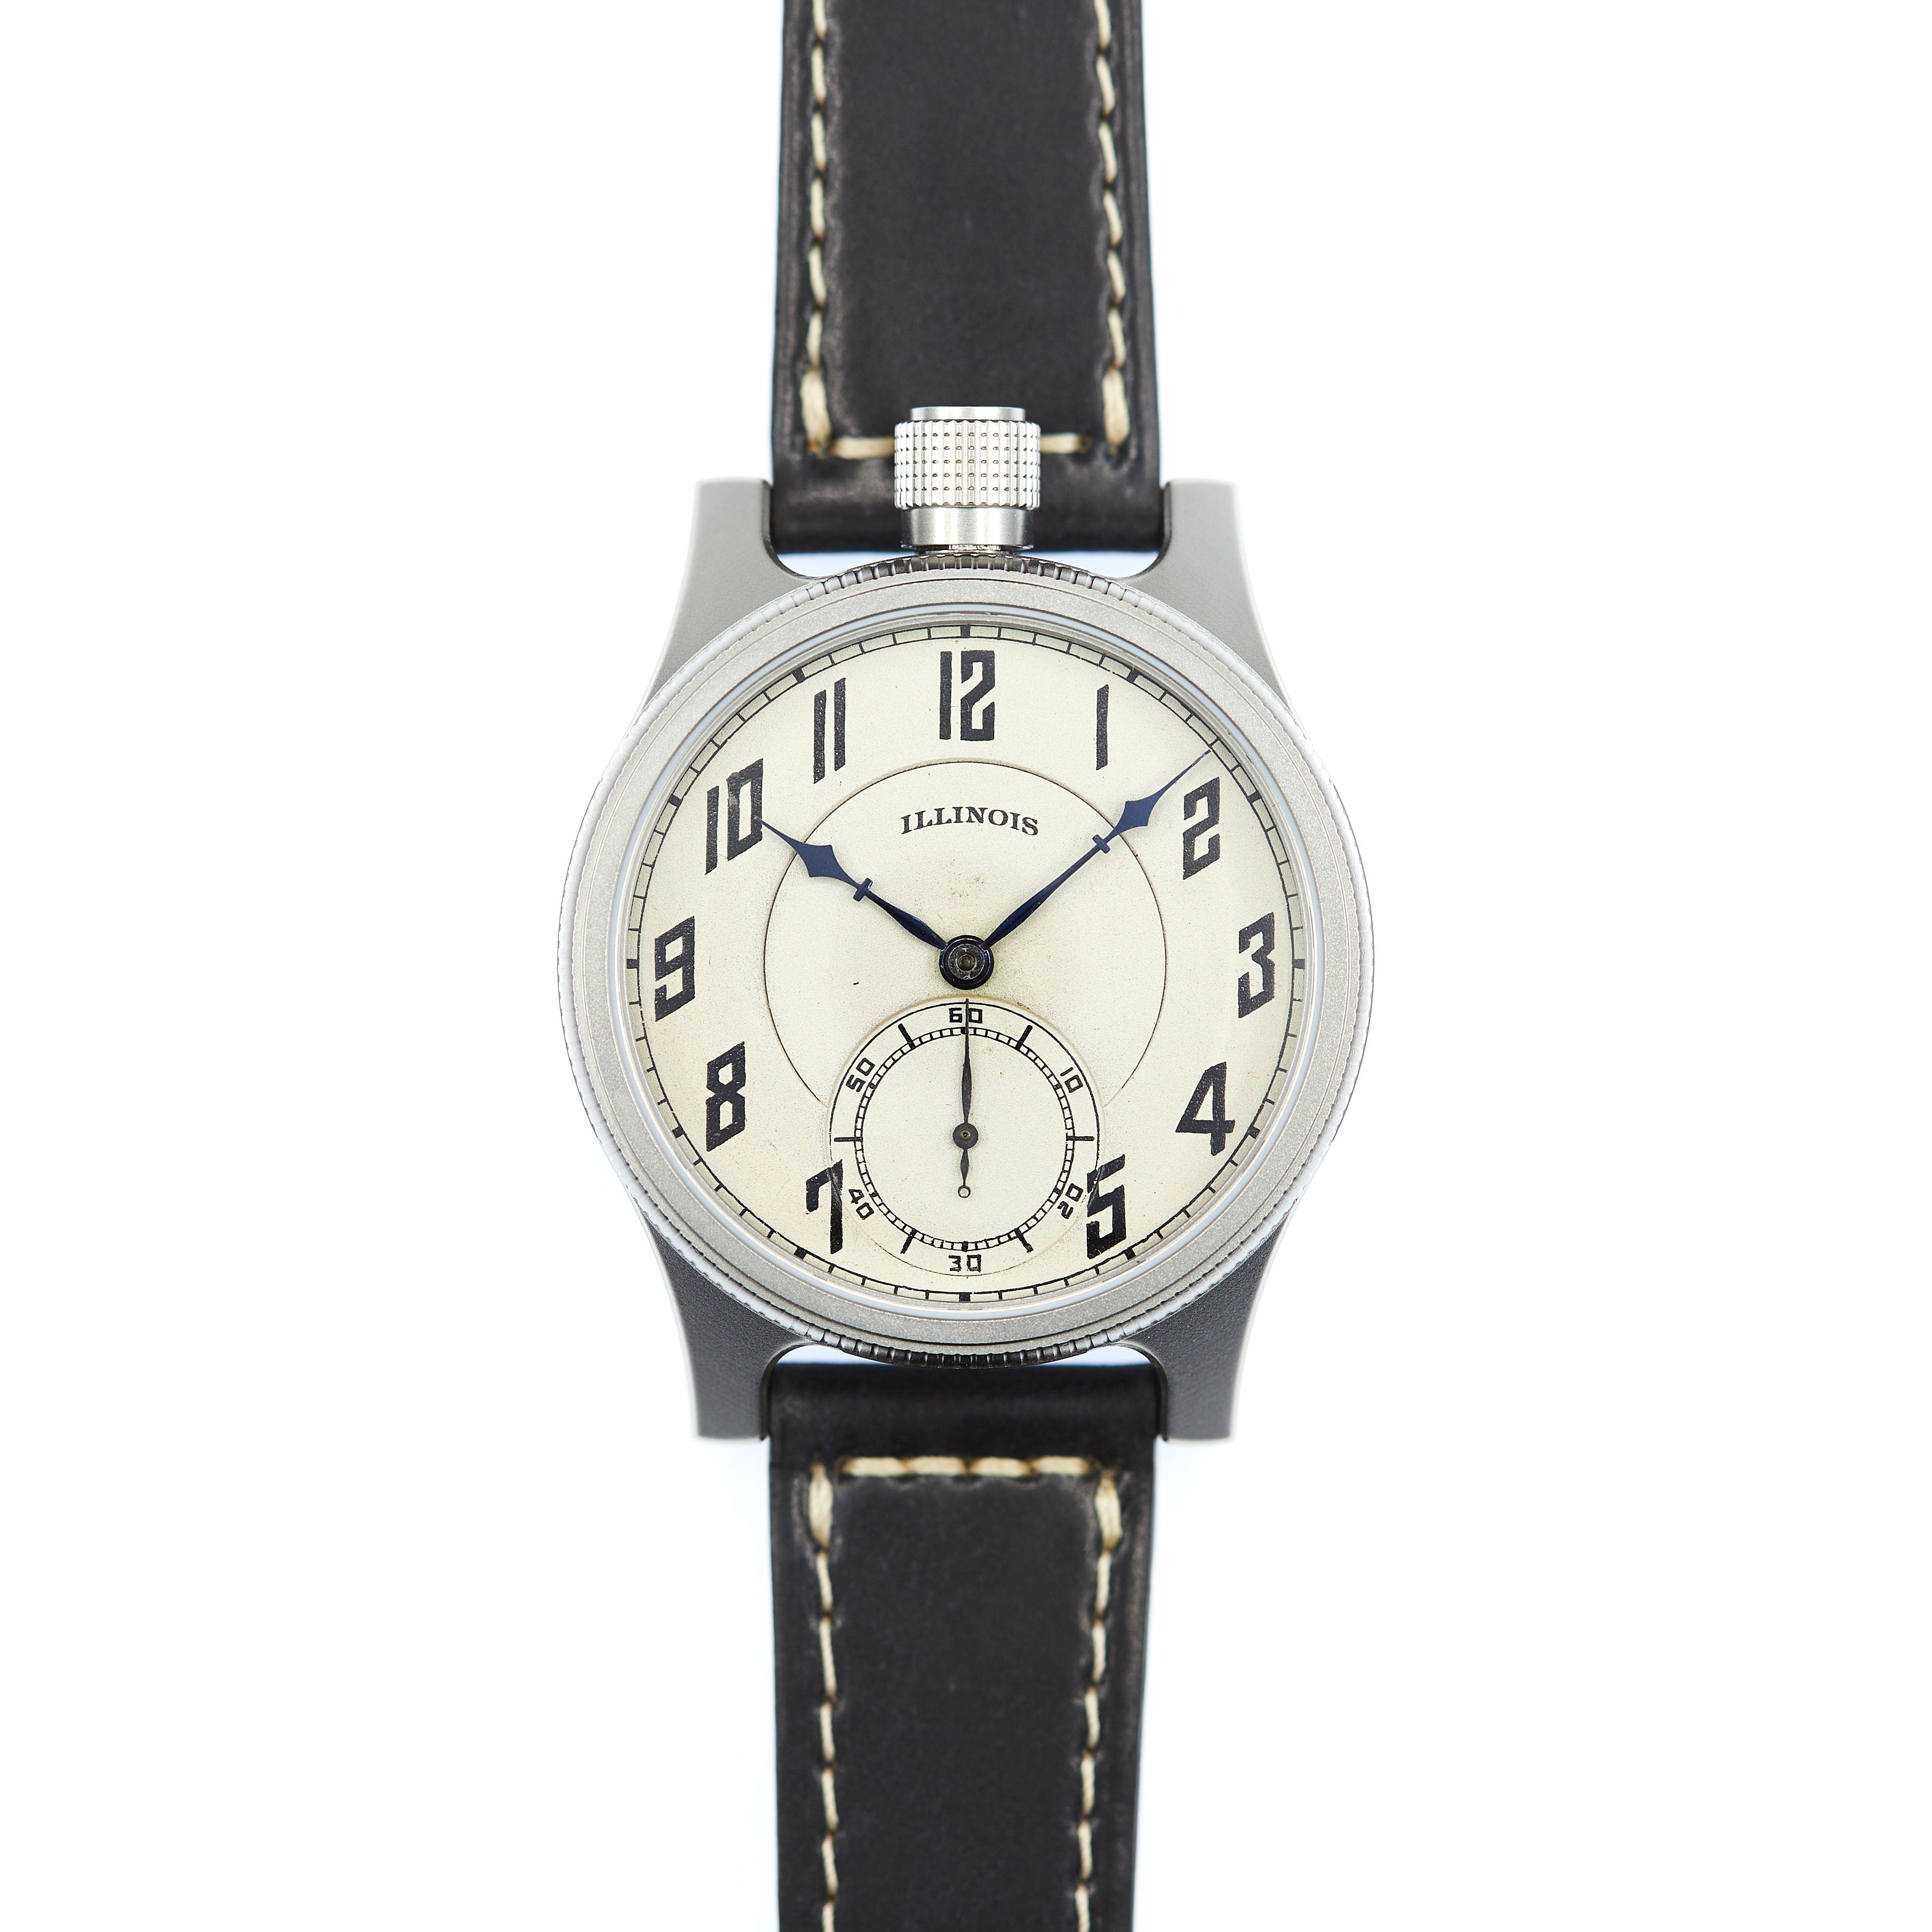 Simon Brette • Timepieces, fine watchmaking watches